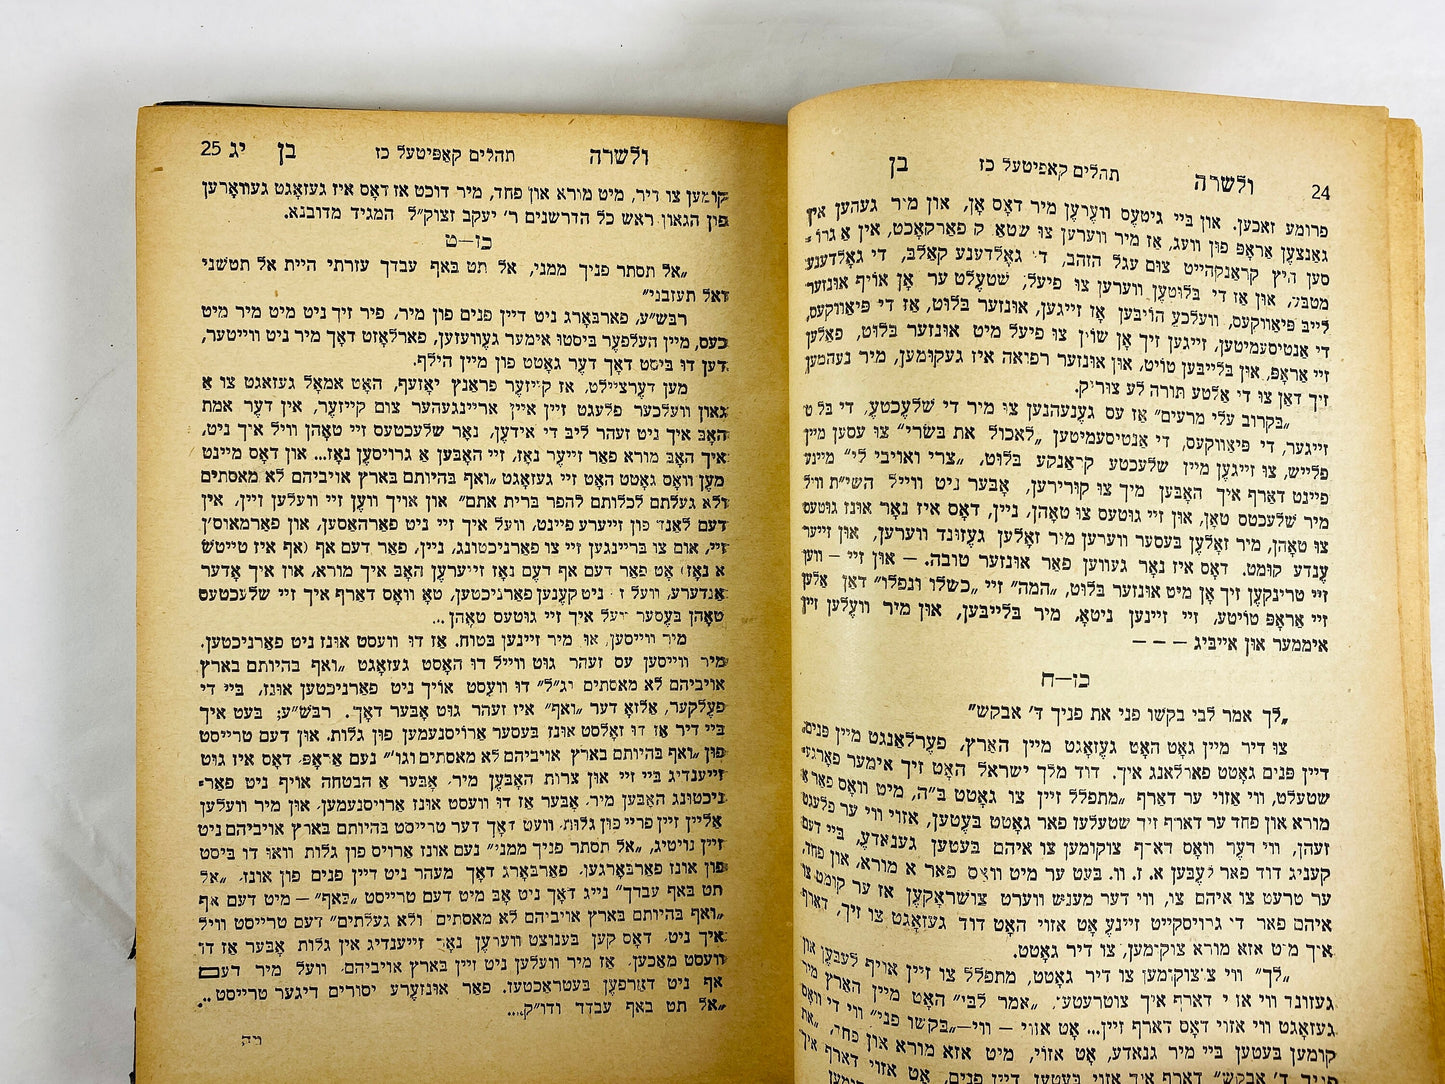 Hebrew Book of Prayers Siddur Vintage Jewish bible Judaism book circa 1912. Black binding. Home bookshelf decor